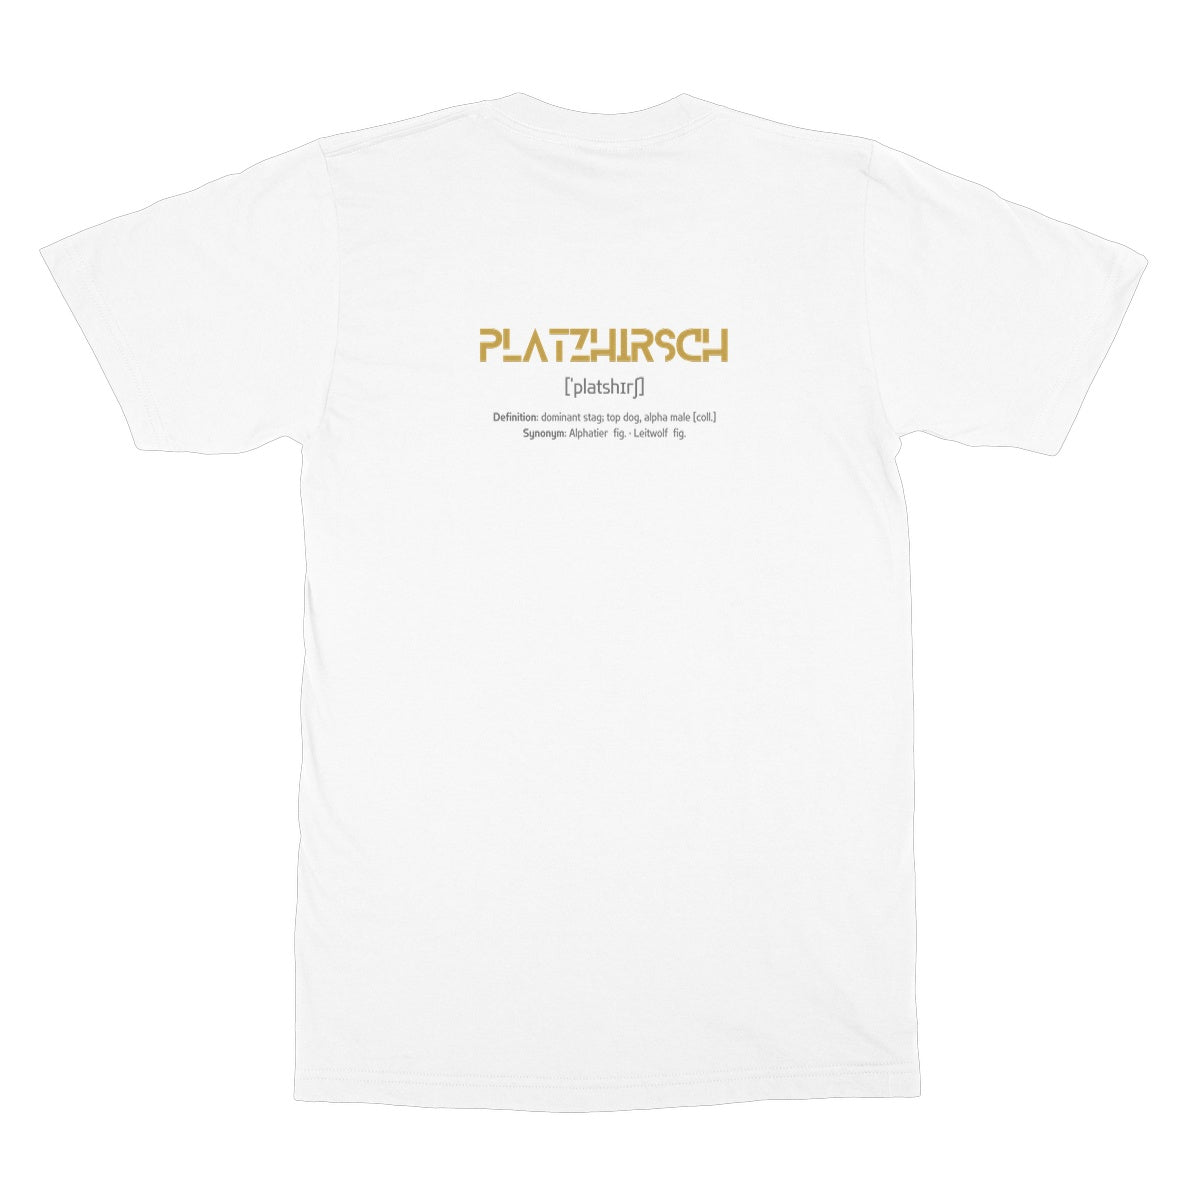 Men's Stag Do Graphic T-Shirt "Platzhirsch" antler, print front & back - White - Bavari Shop - Bavarian Outfits, Dirndl, Lederhosen & Accessories